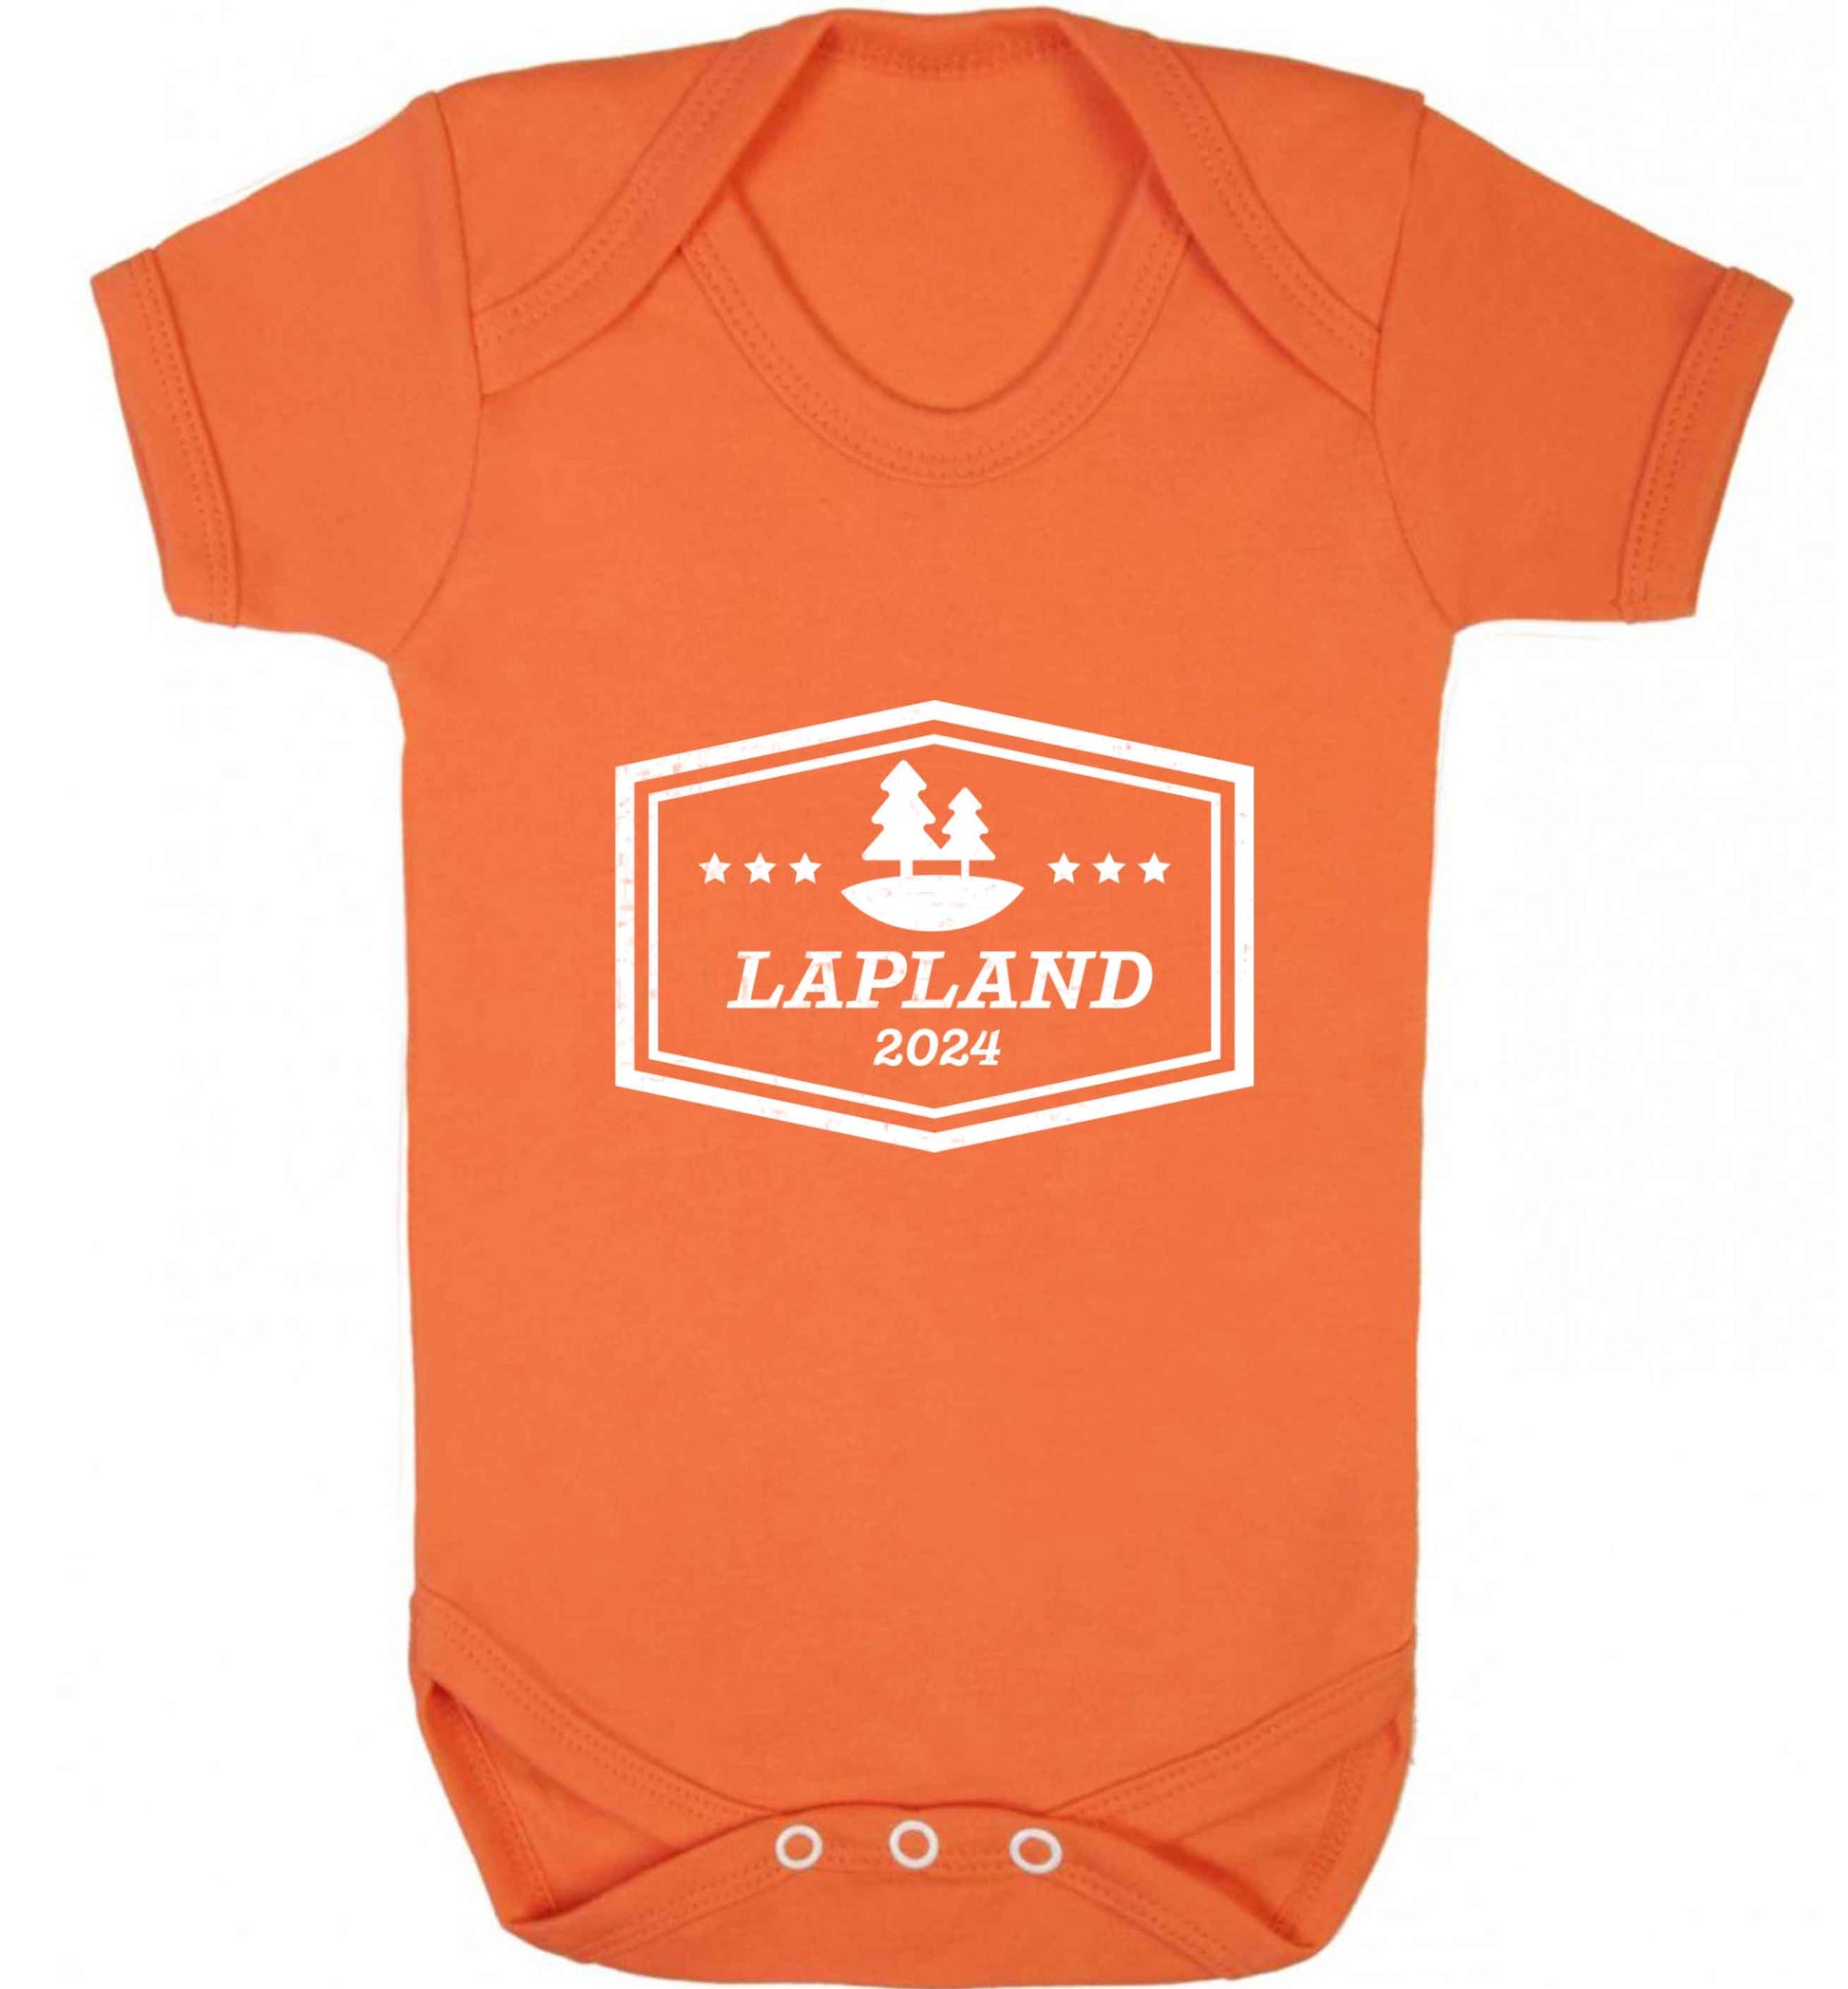 Custom date Lapland baby vest orange 18-24 months